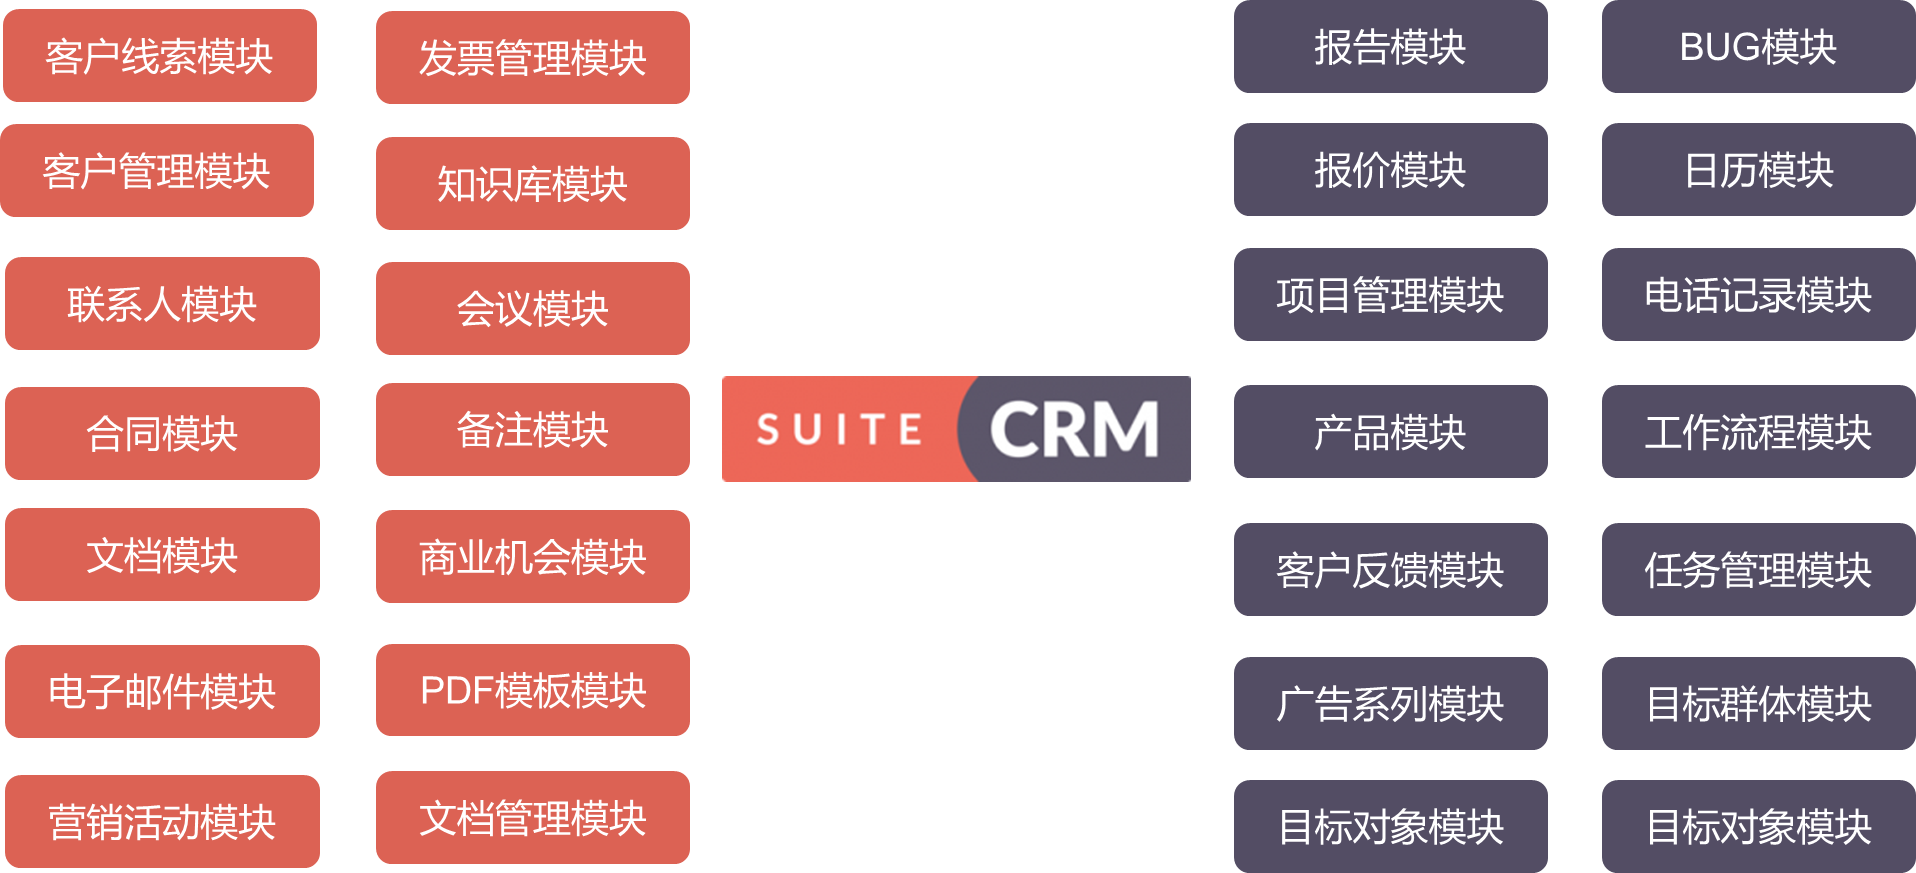 crm系统在线试用,crm下载,crm销售管理系统,crm销售管理系统软件,crm销售系统